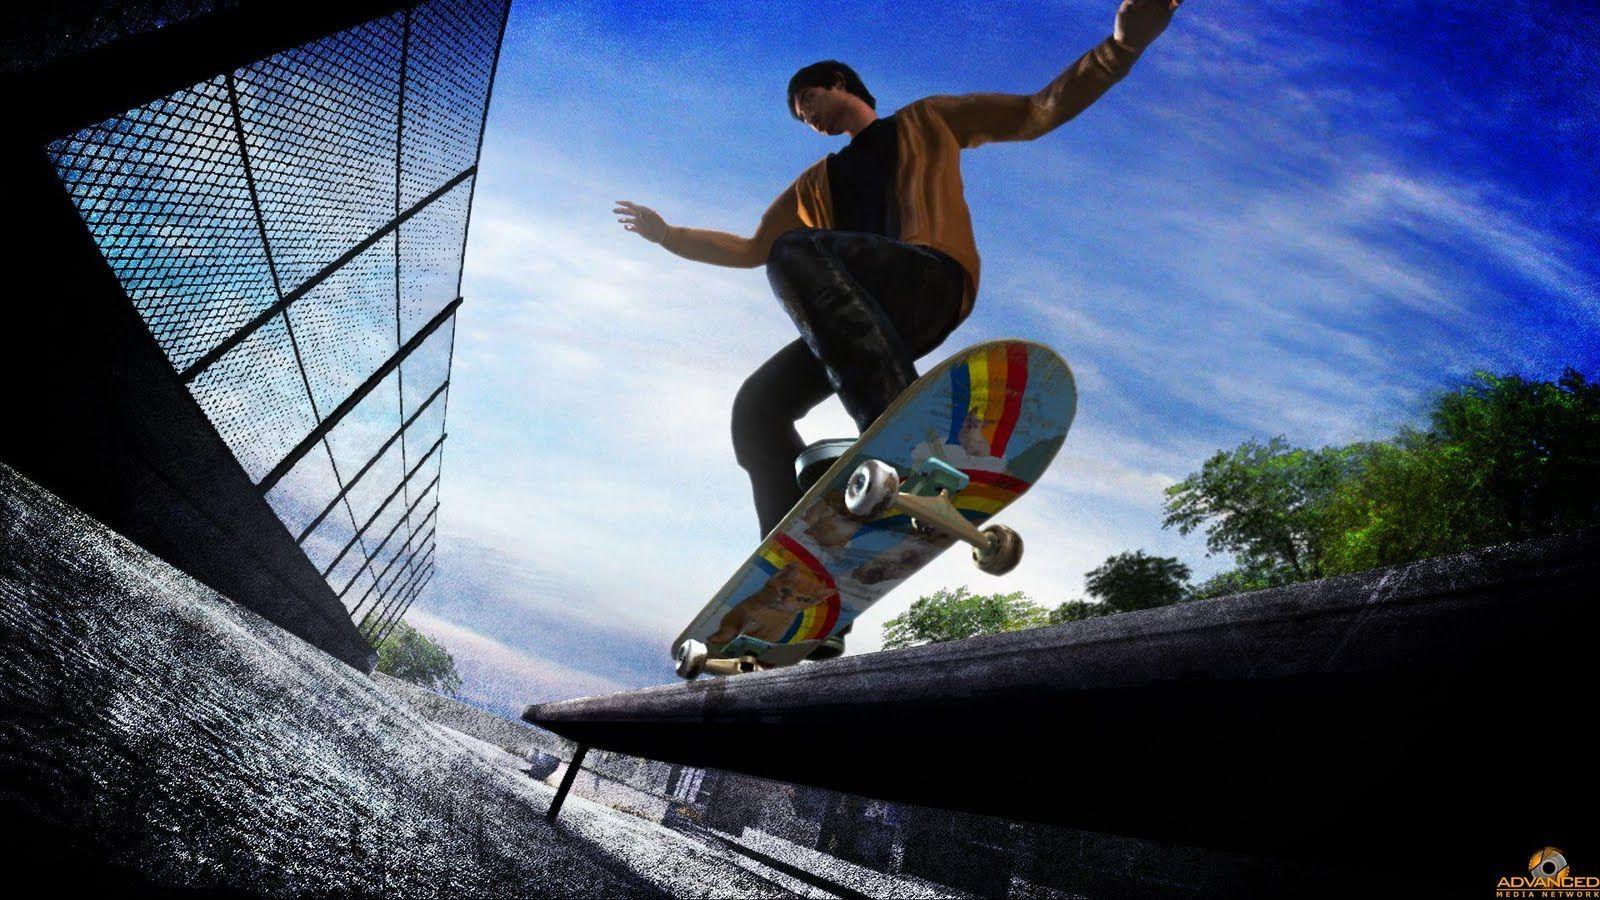 Wallpaper For > Skateboard Trick Wallpaper HD